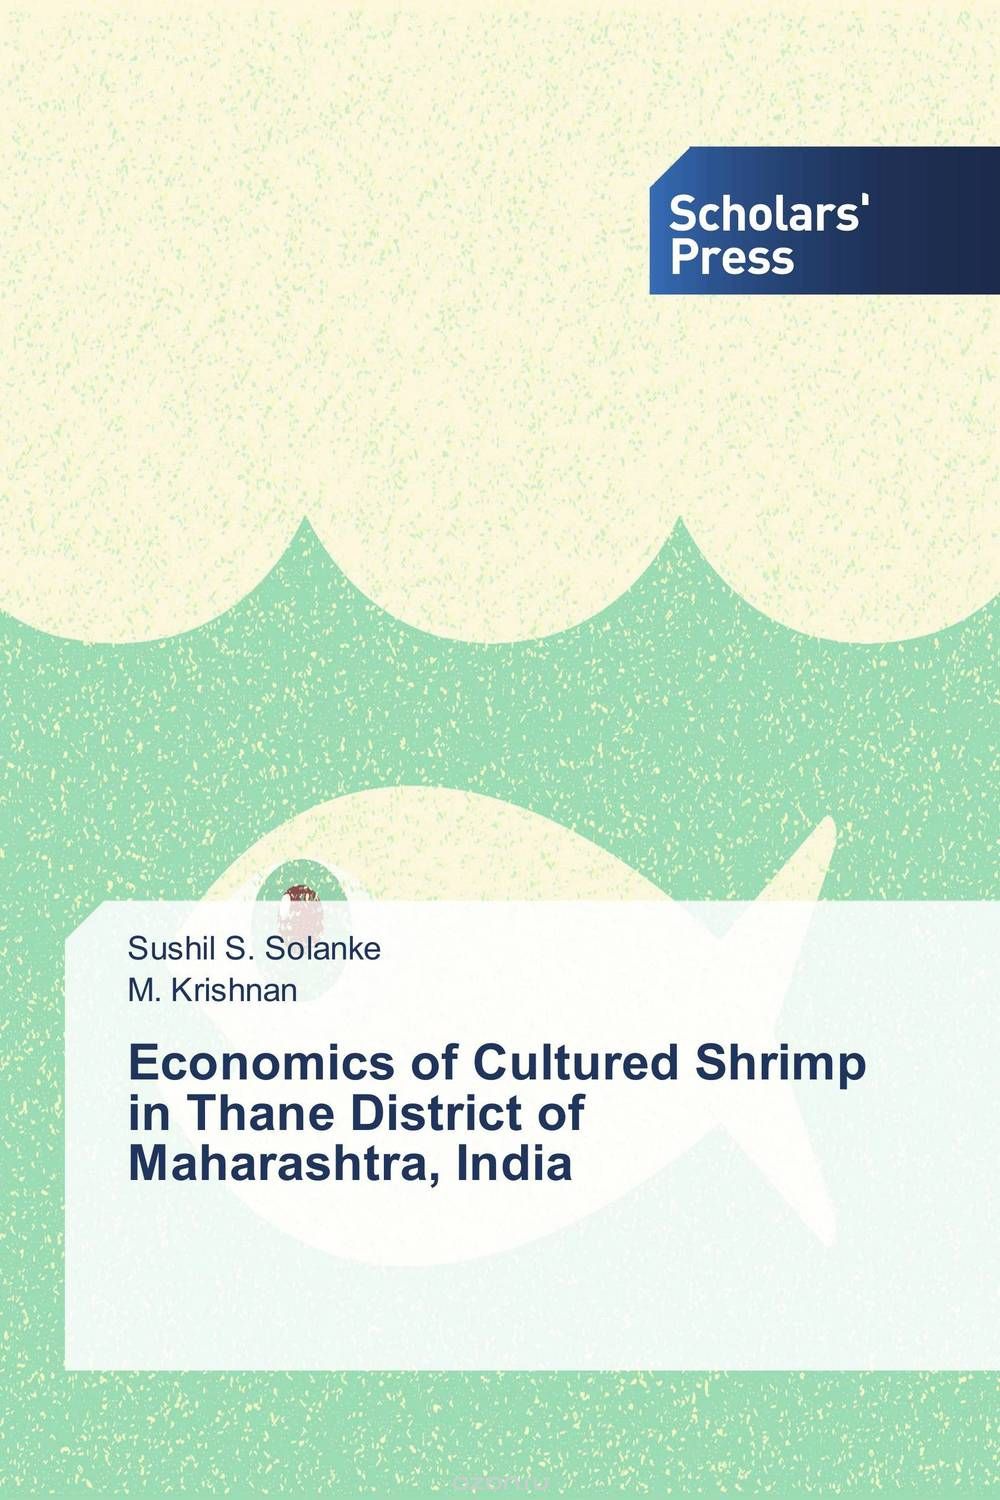 Скачать книгу "Economics of Cultured Shrimp in Thane District of Maharashtra, India"